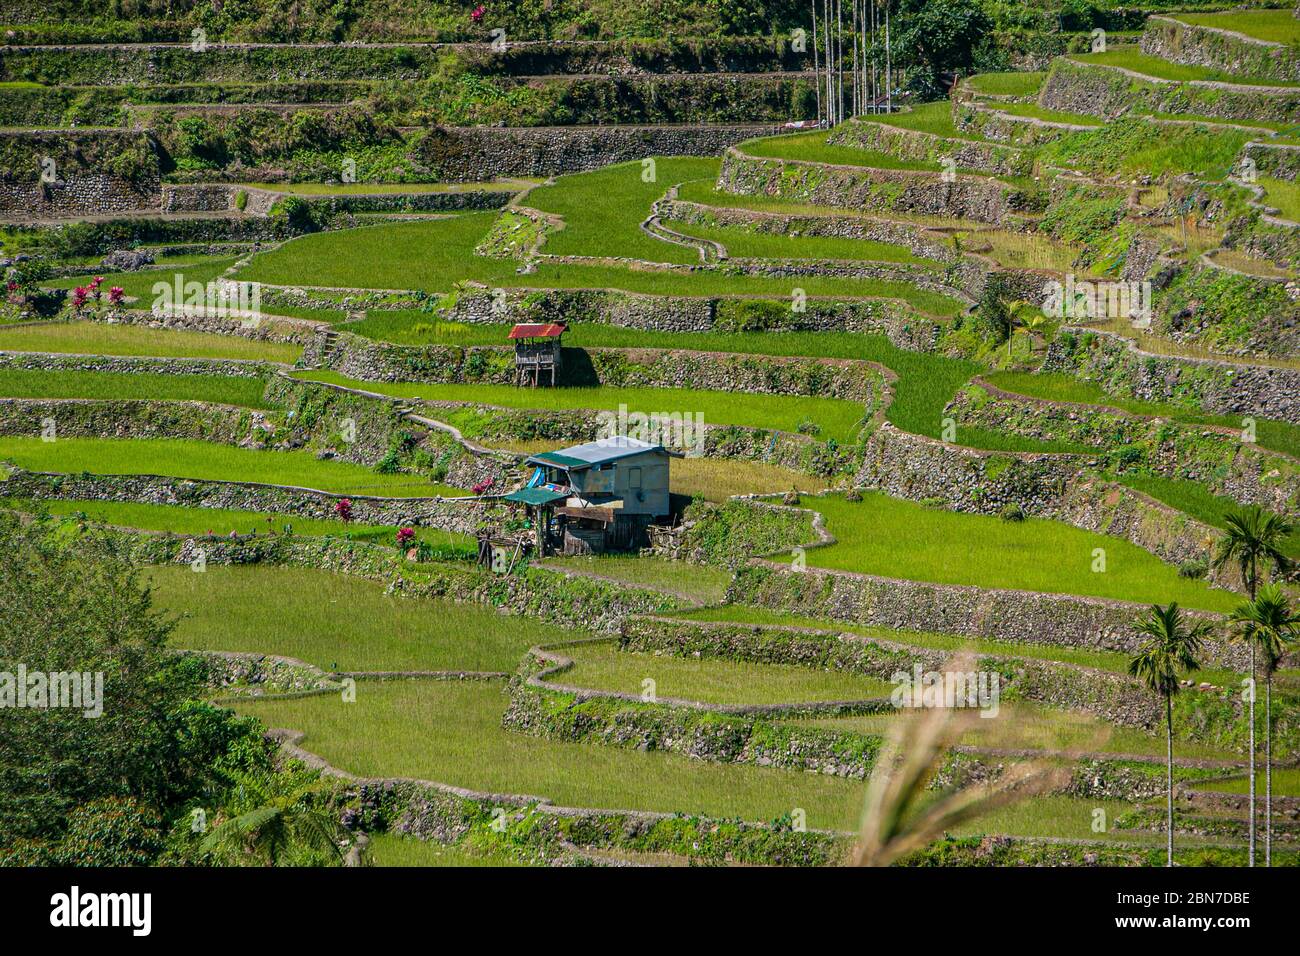 A farm house in the Banaue rice terrace at hungduan rice terraces - ifugao Stock Photo